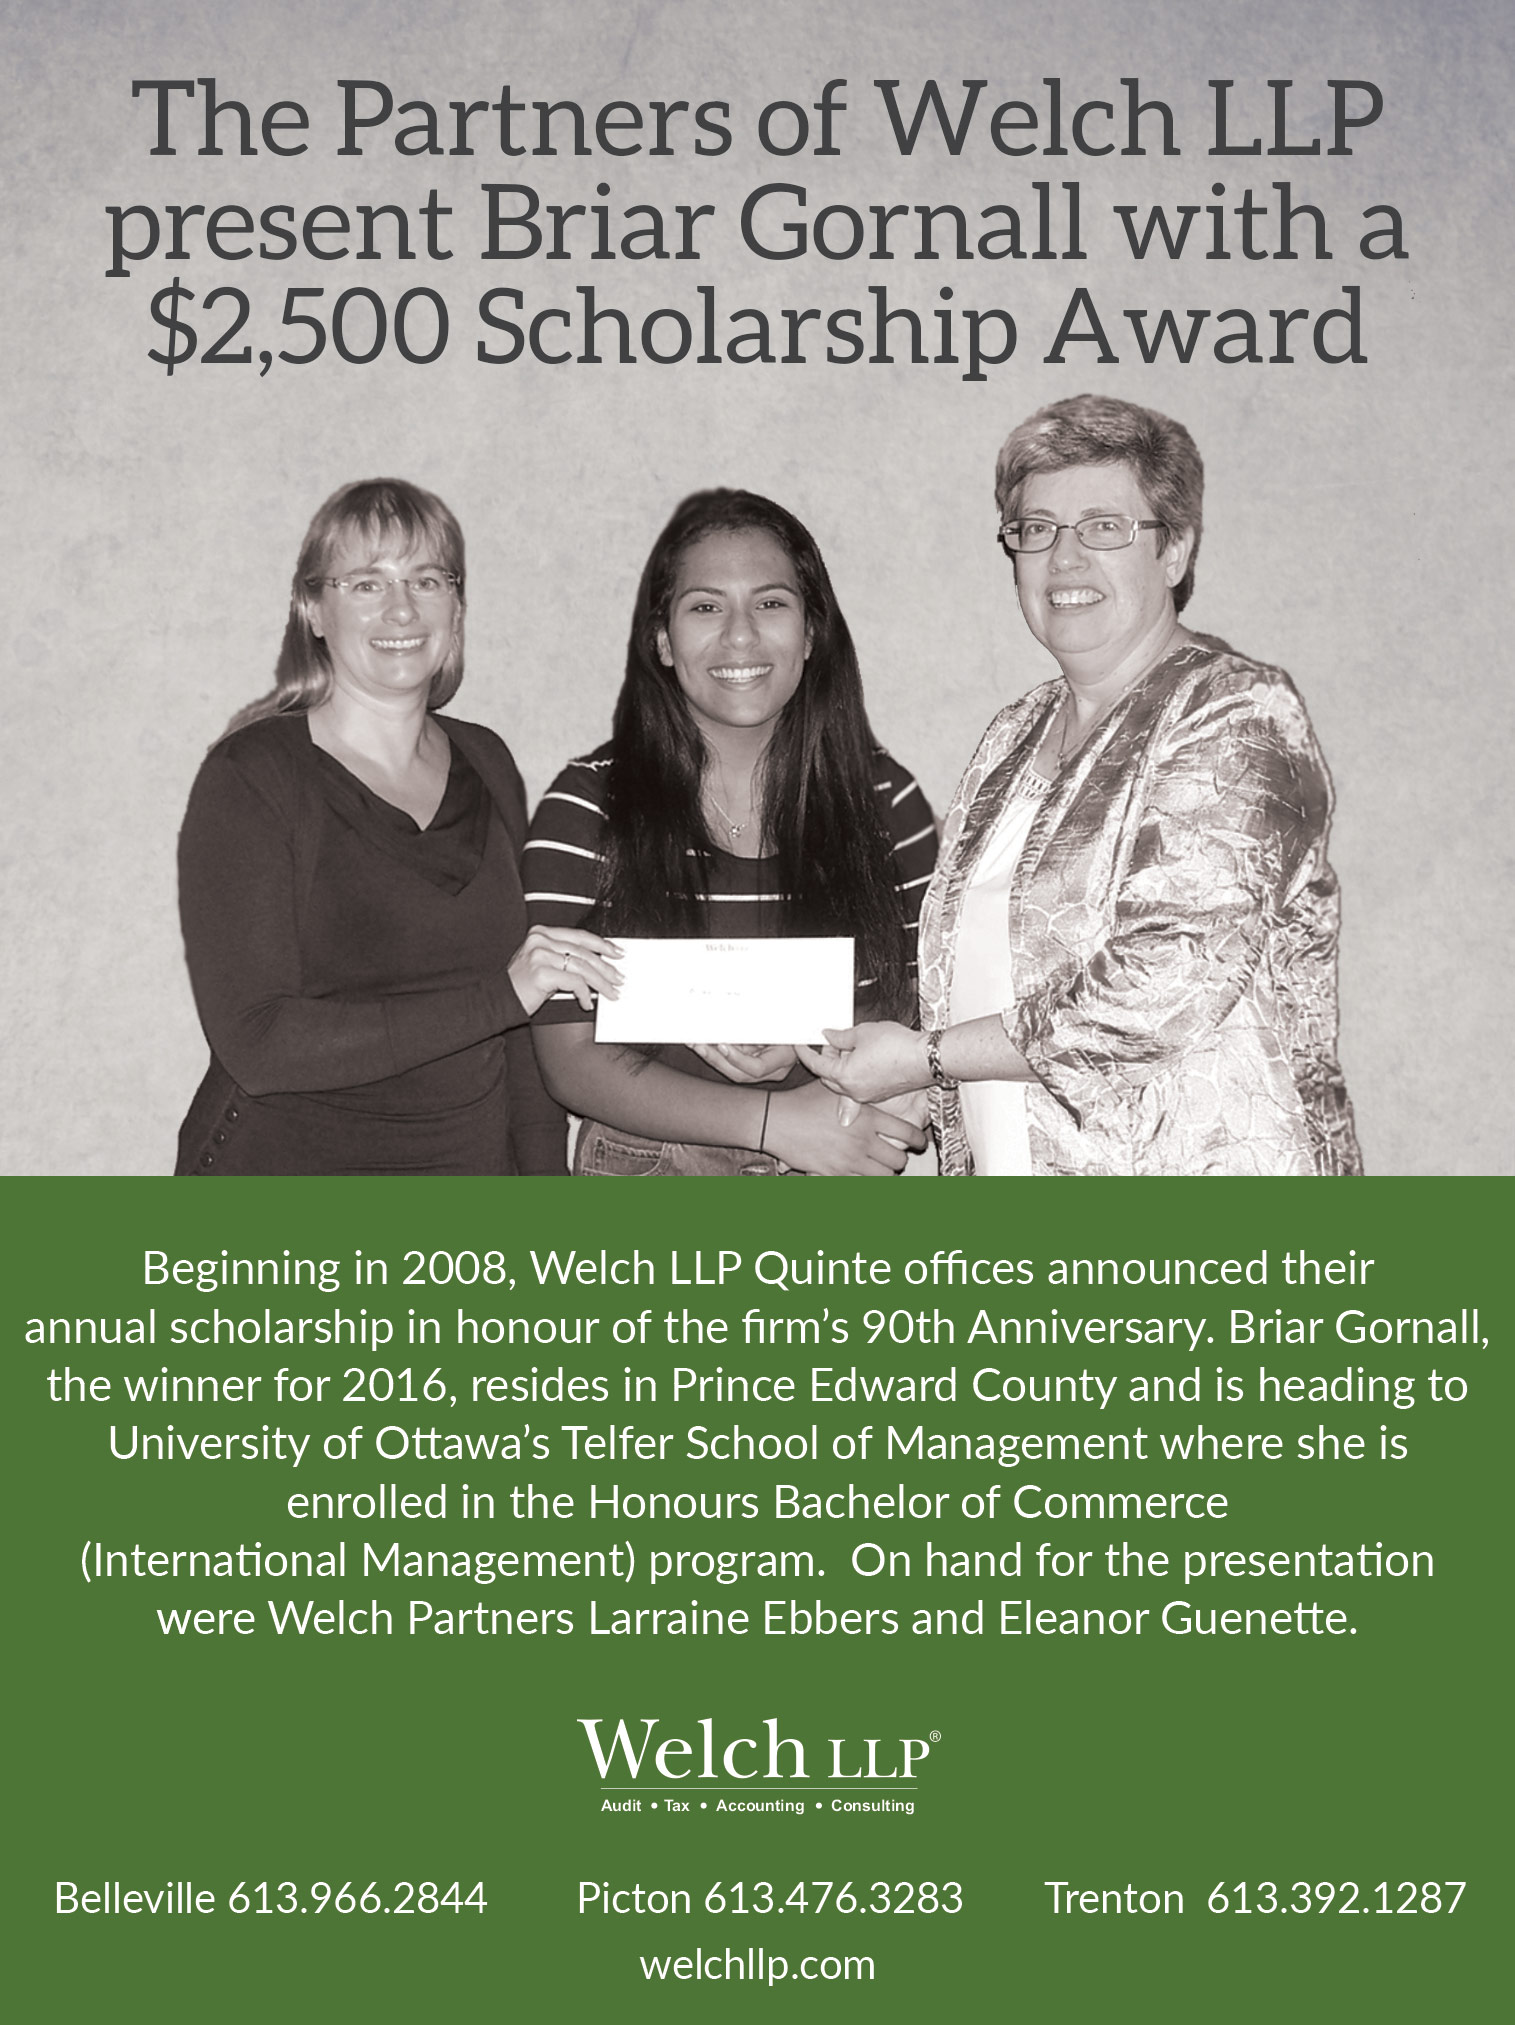 Welch LLP Partners Present Briar Gornall A $2,500 Scholarship Award